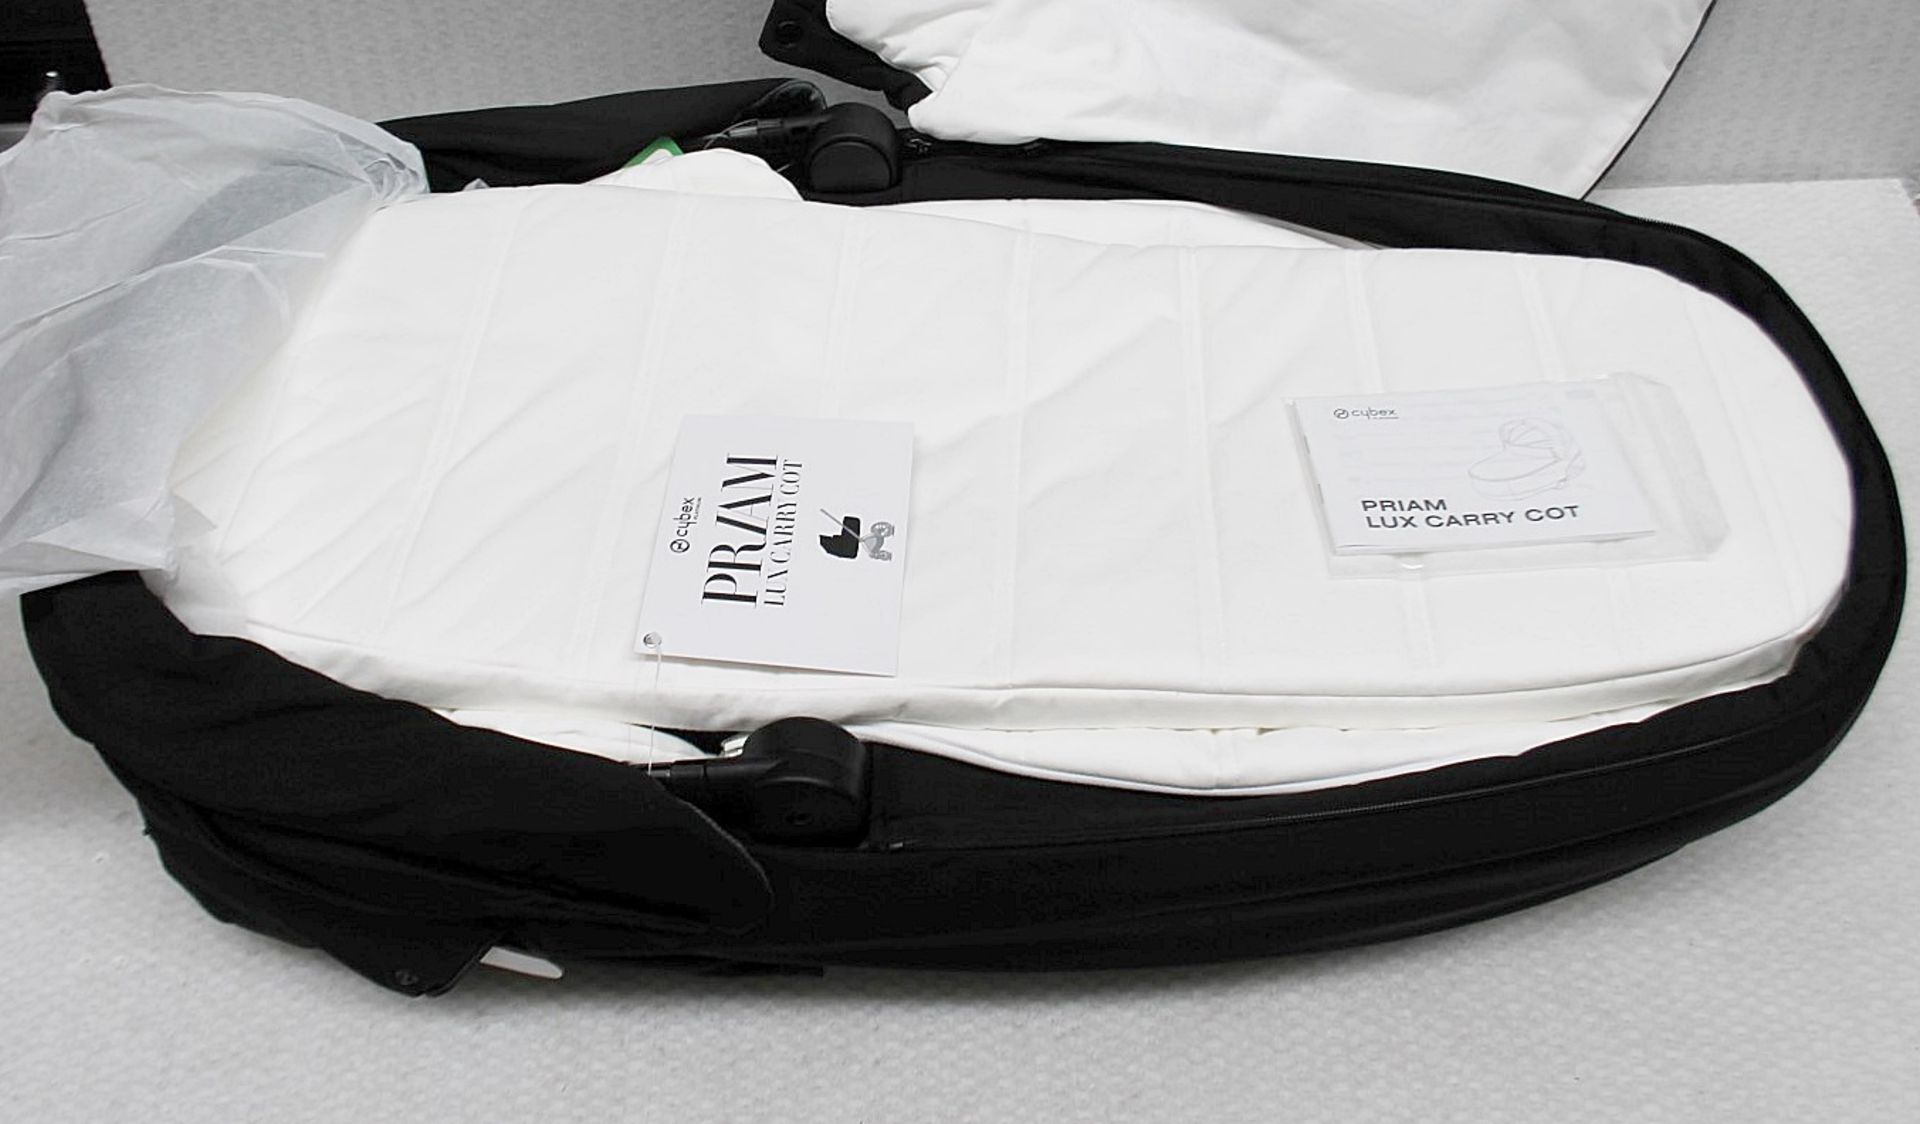 1 x CYBEX 'Priam' Luxury Carrycot In Black - Original Price £329.95 - Unused Boxed Stock - Image 17 of 19